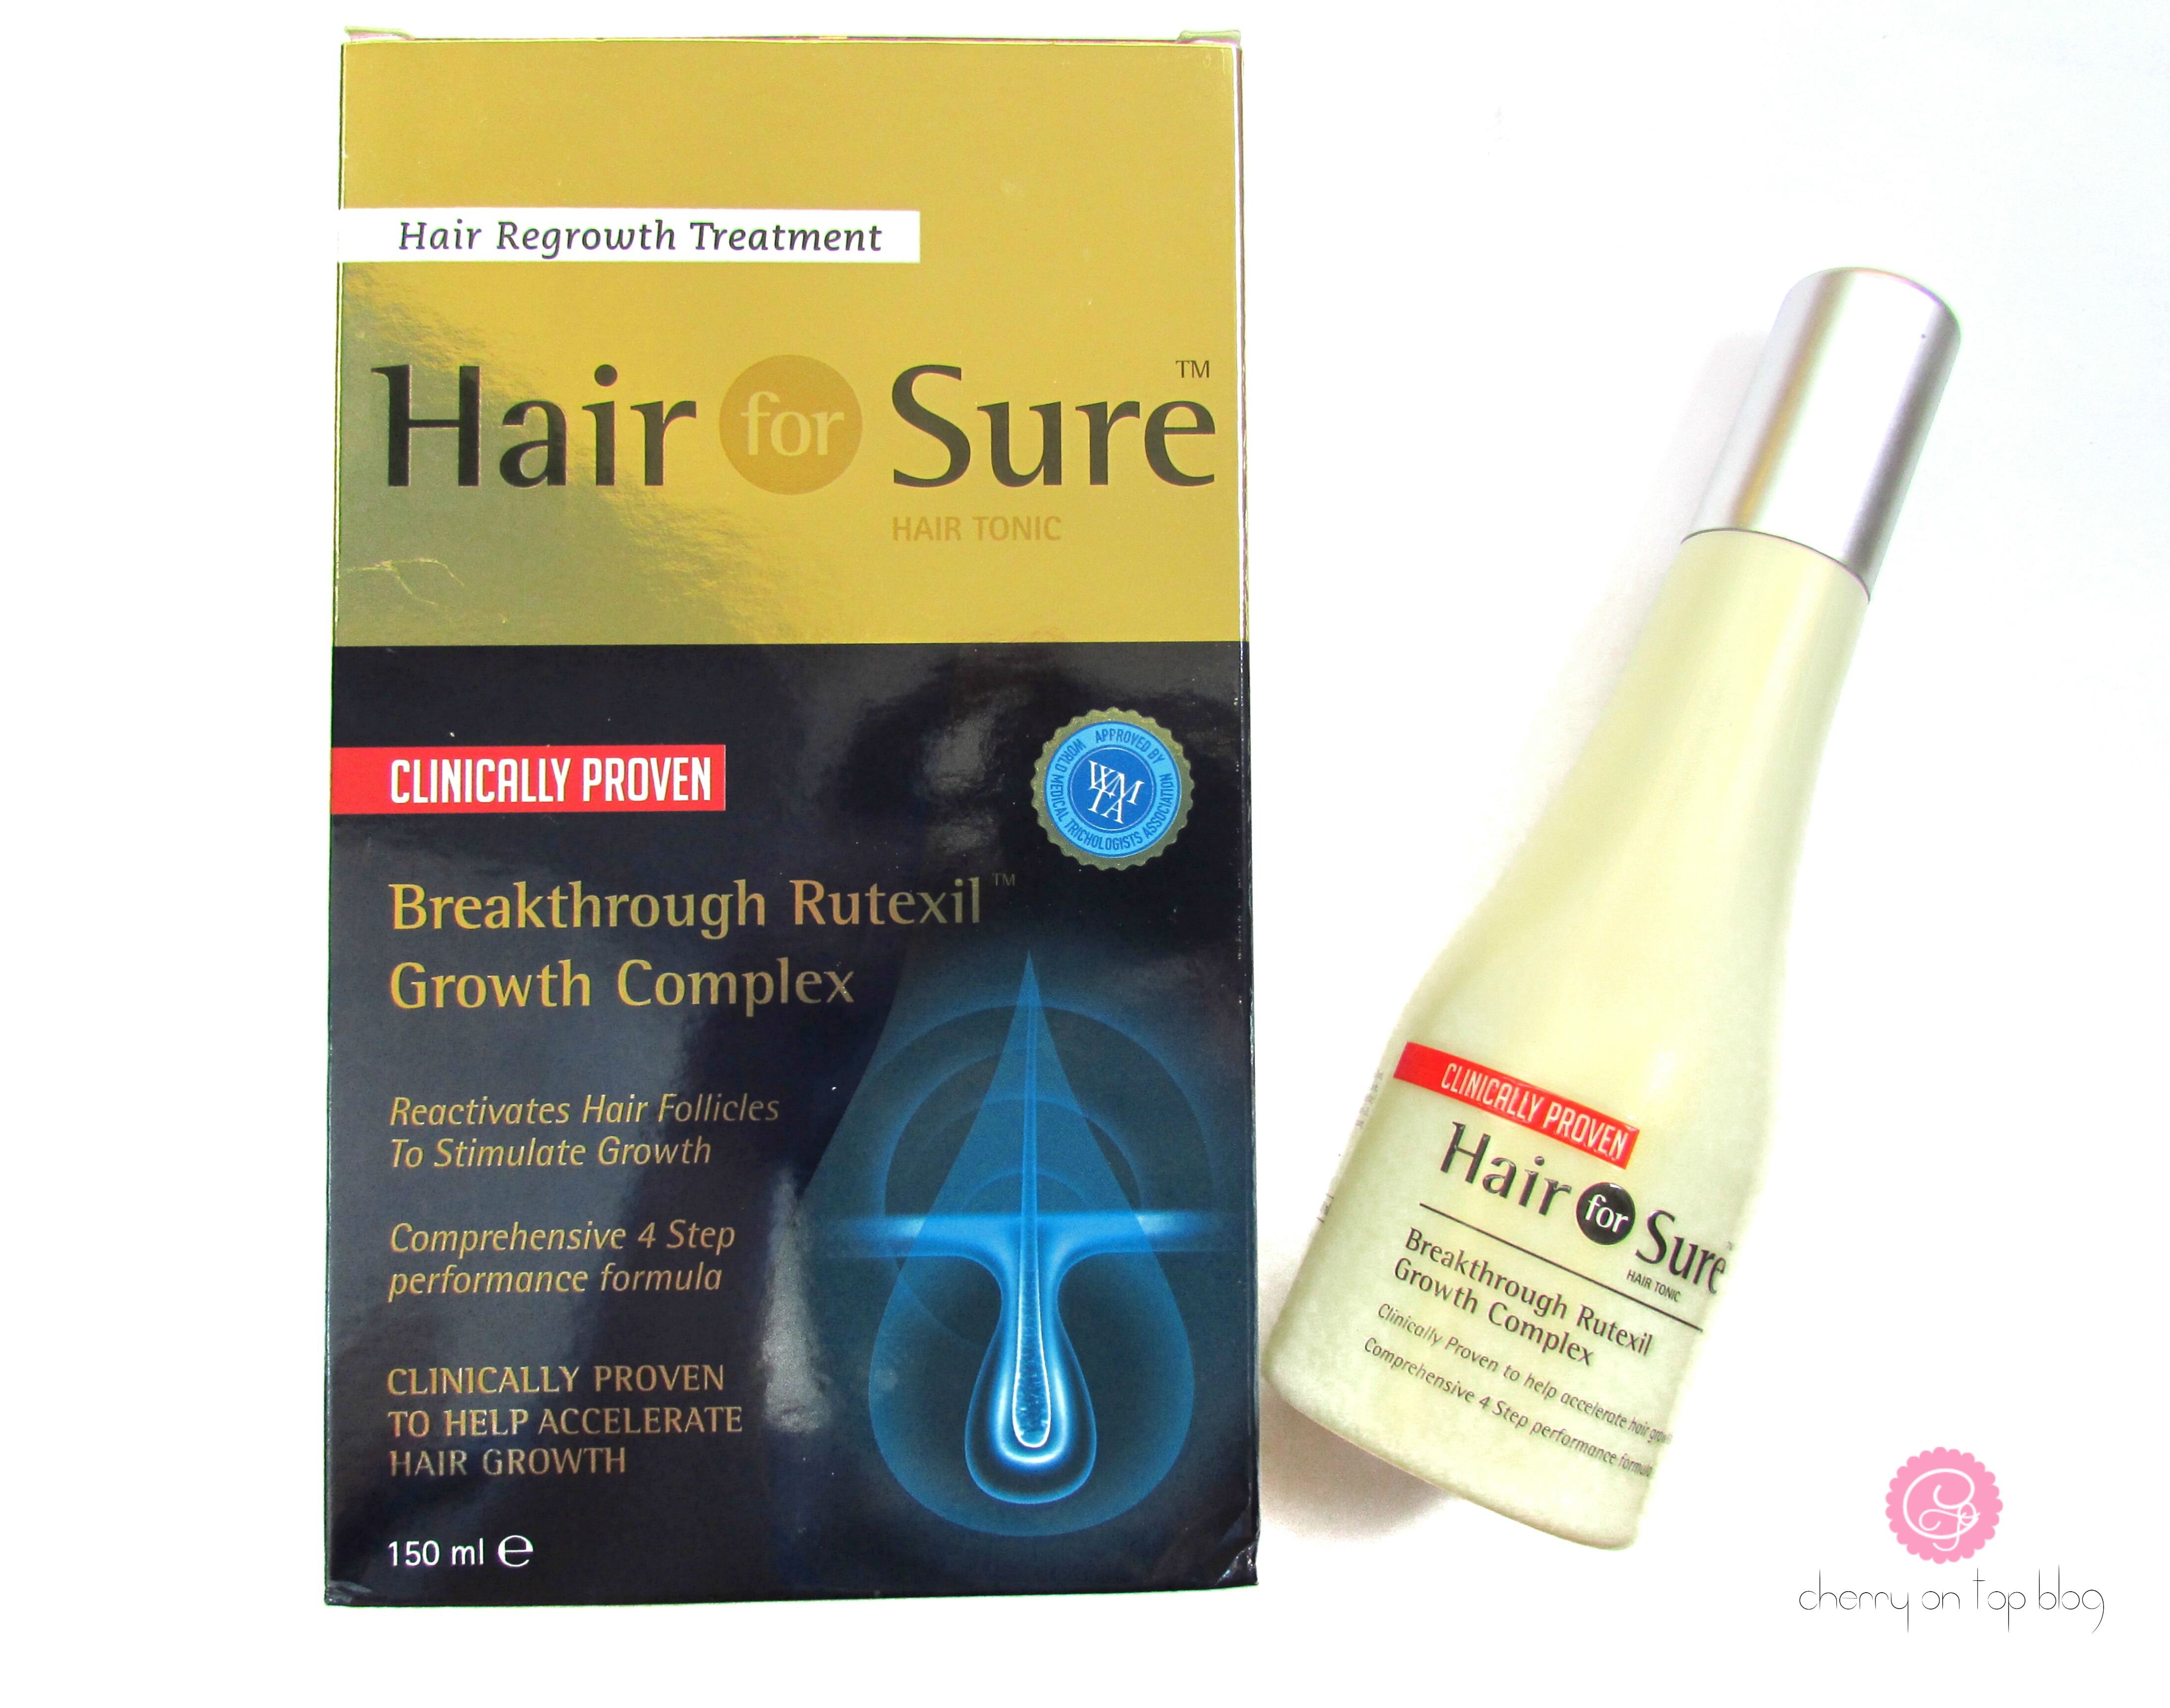 Hair for Sure Hair Regrowth Treatment Review | cherryontopblog.com